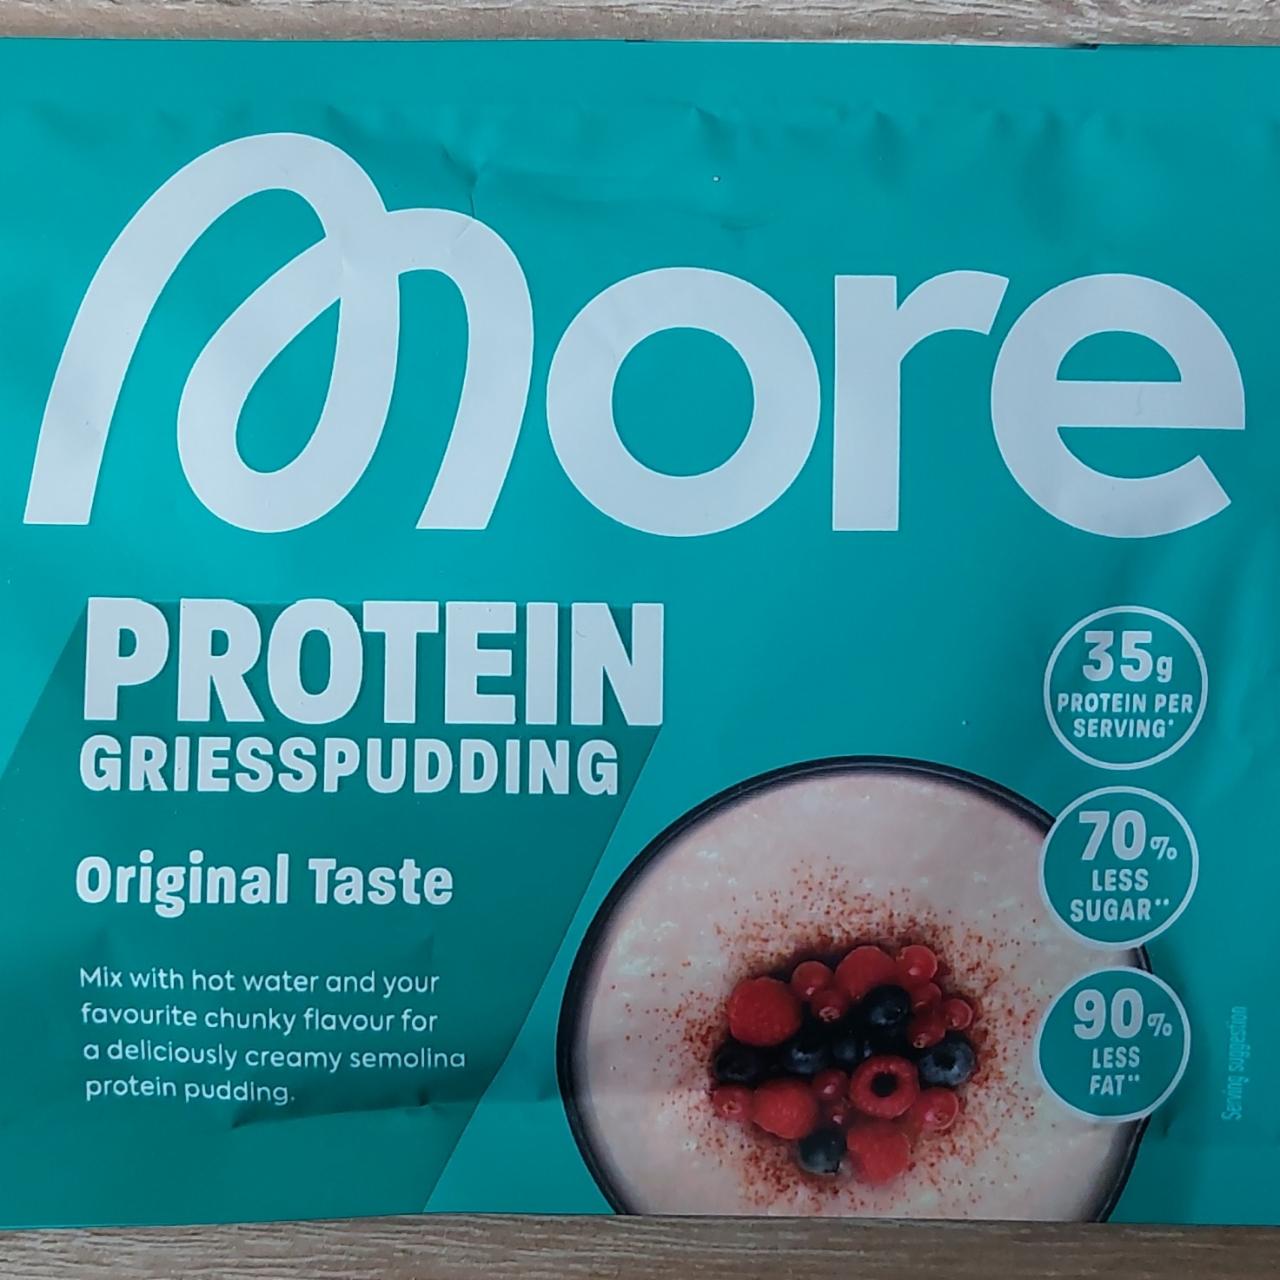 Fotografie - Protein griesspudding original taste More Nutrition